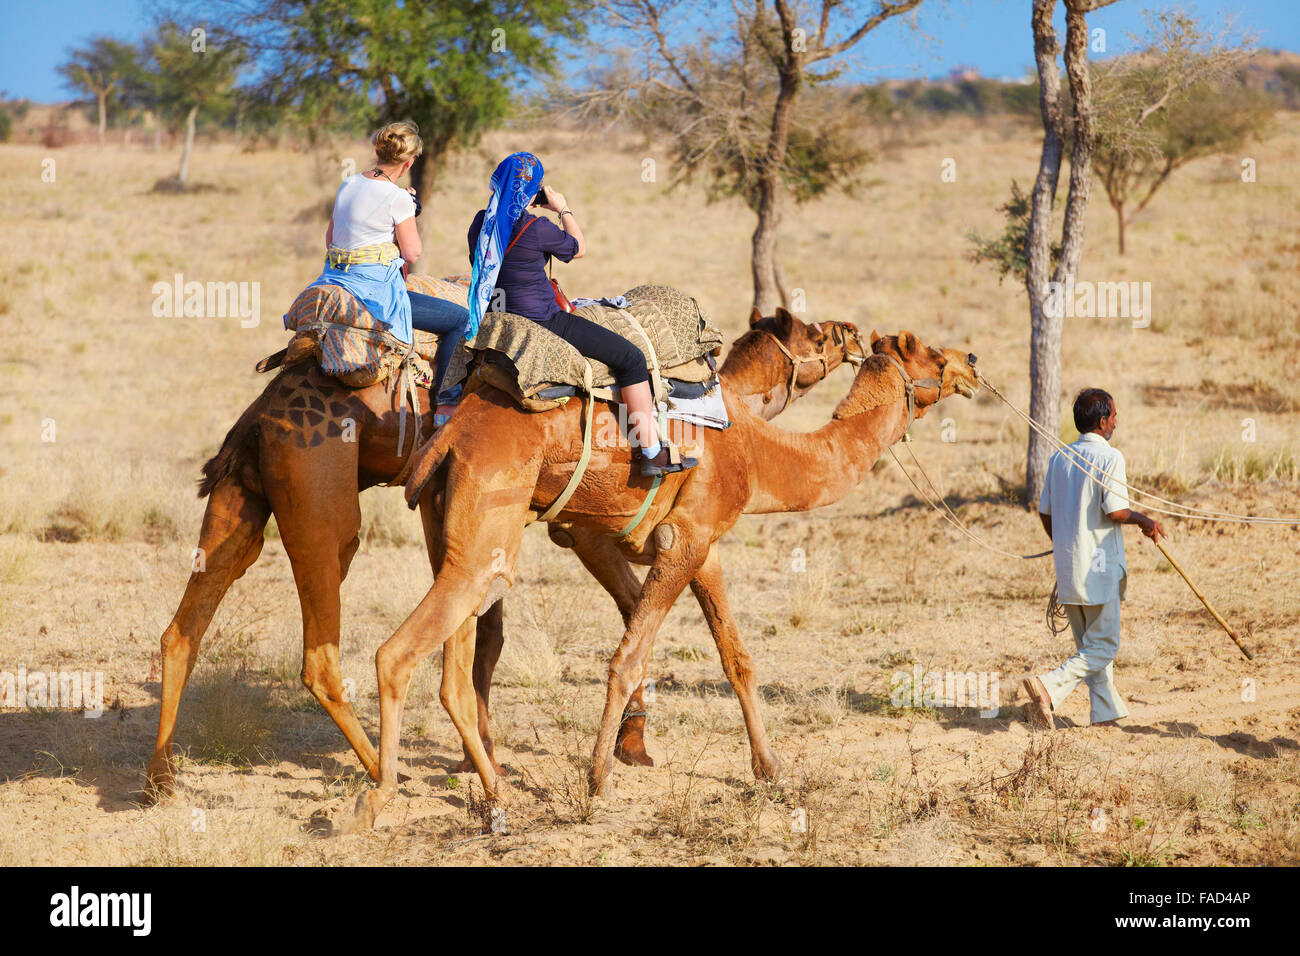 Dos camellos con turistas ride safari en el desierto de Thar, cerca de Jaisalmer, India Foto de stock